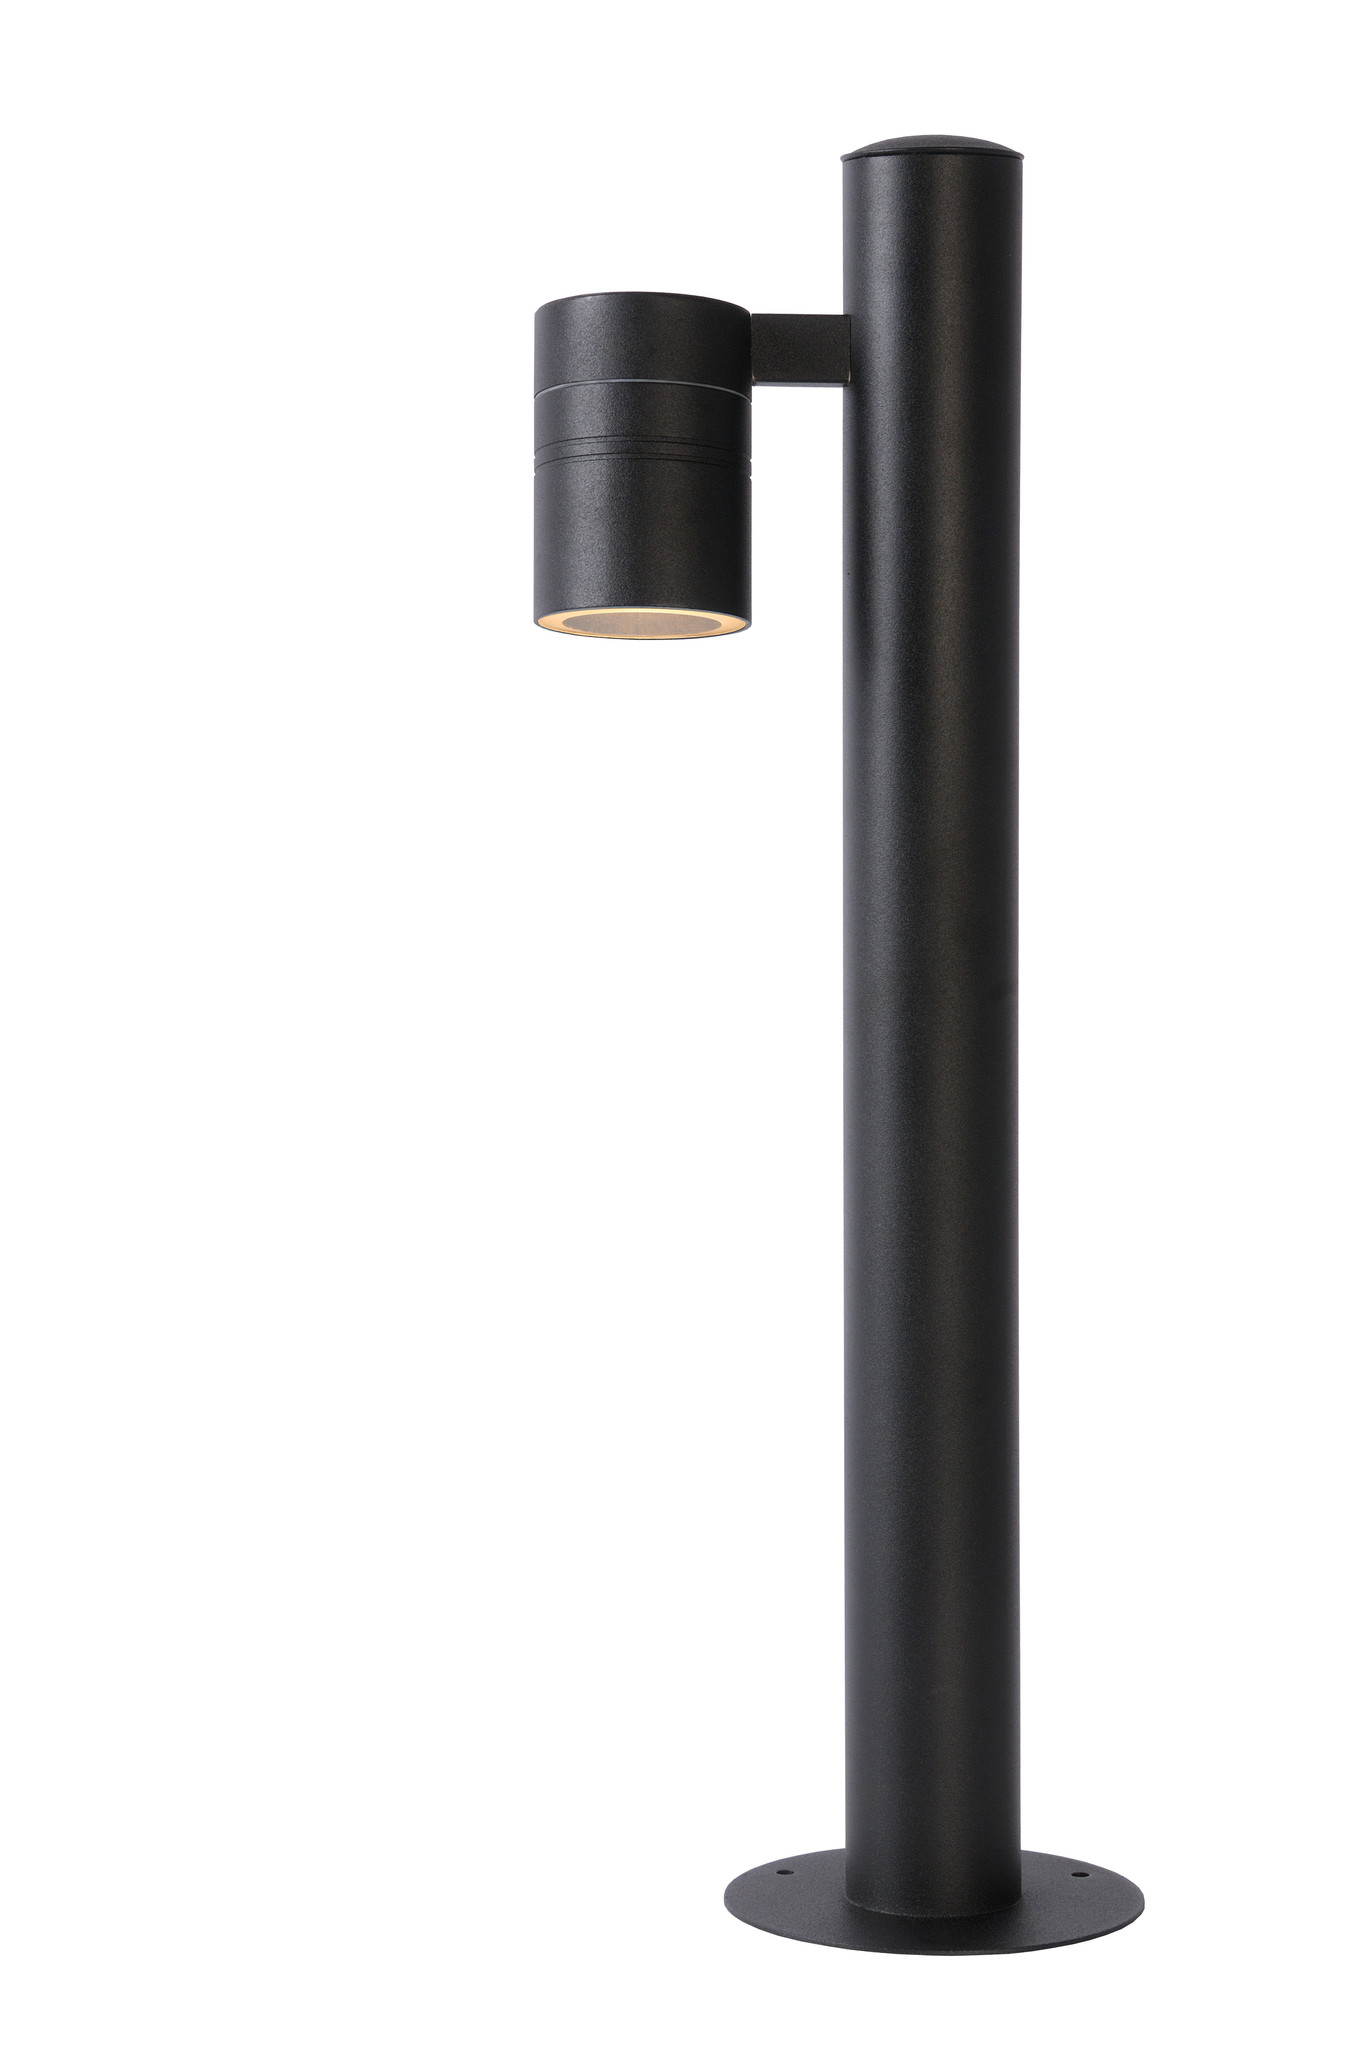 Lieve zuurstof Categorie Tuinspot zwart of grijs op sokkel 1x GU10 of 2x GU10 | My Planet LED